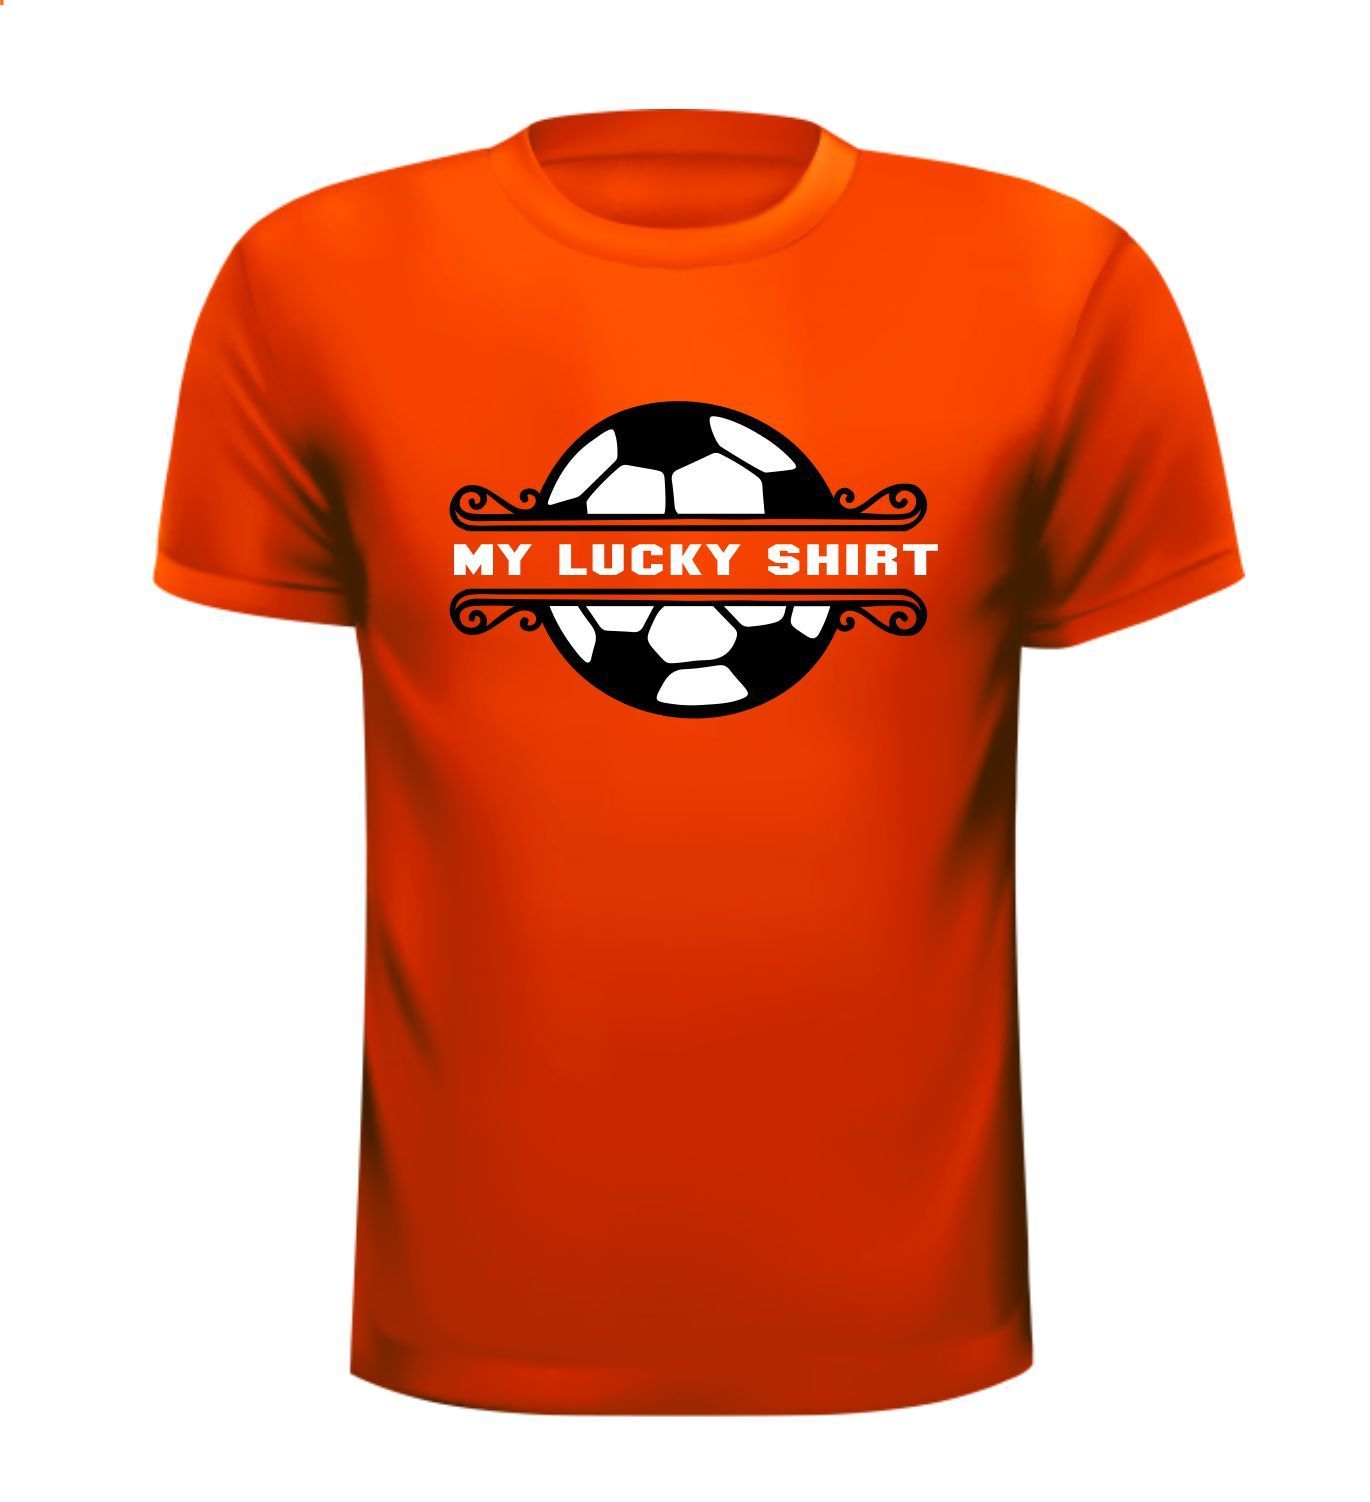 My lucky shirt voetbal oranje EK WK voeballen geluksshirt